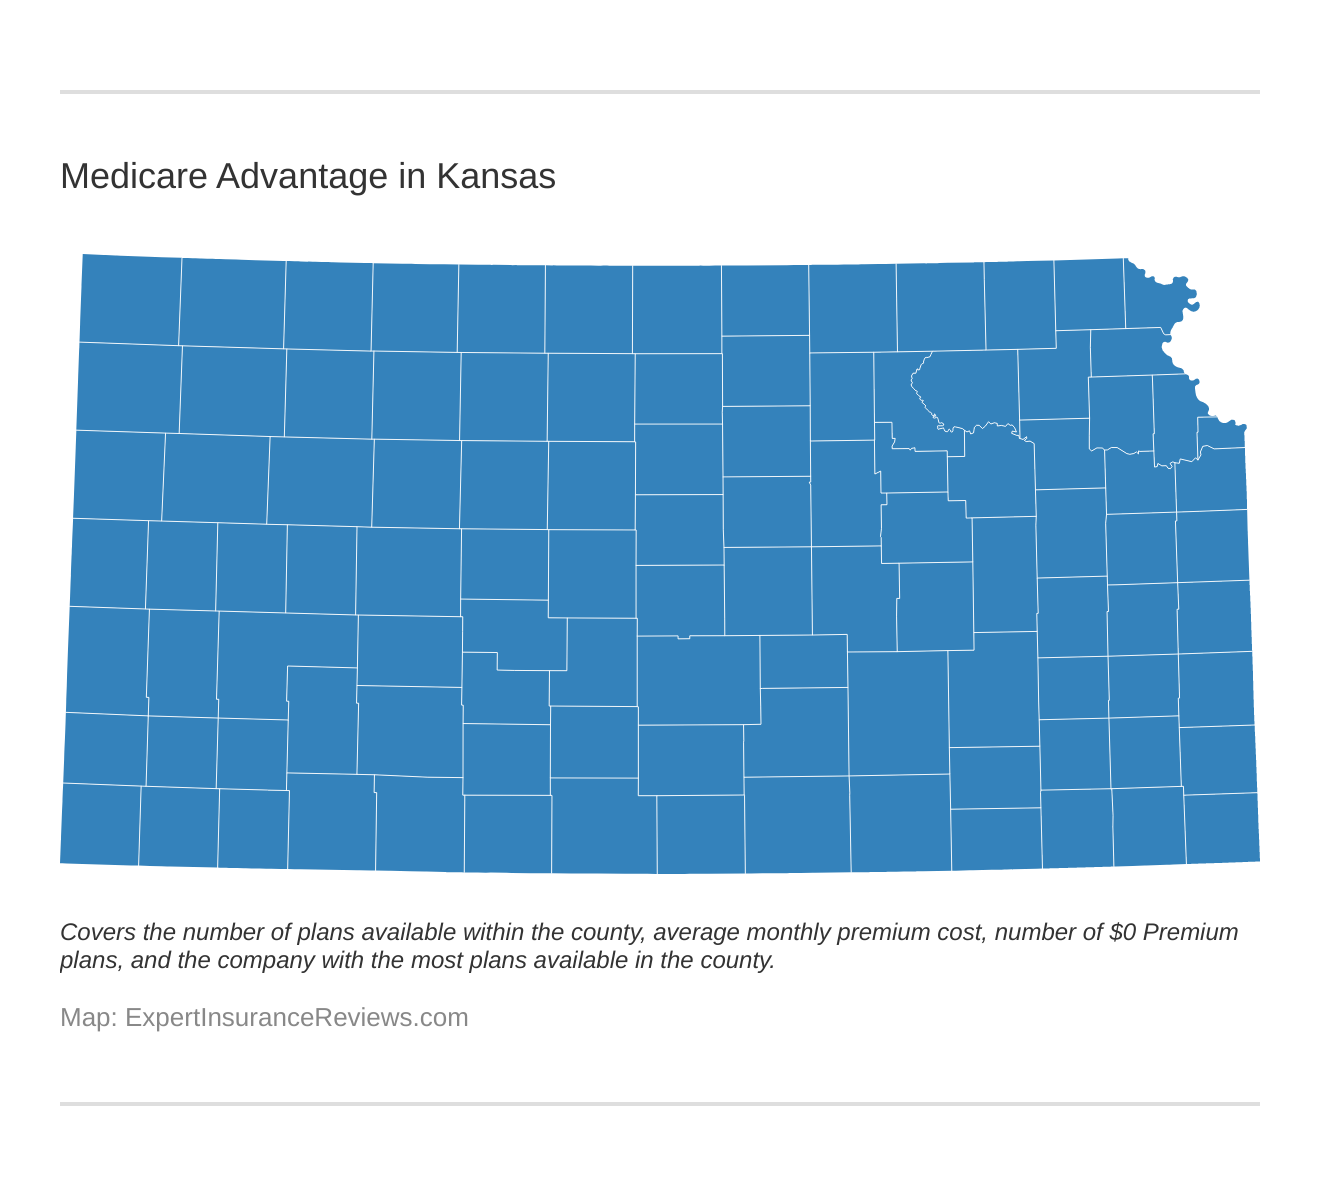 Medicare Advantage in Kansas